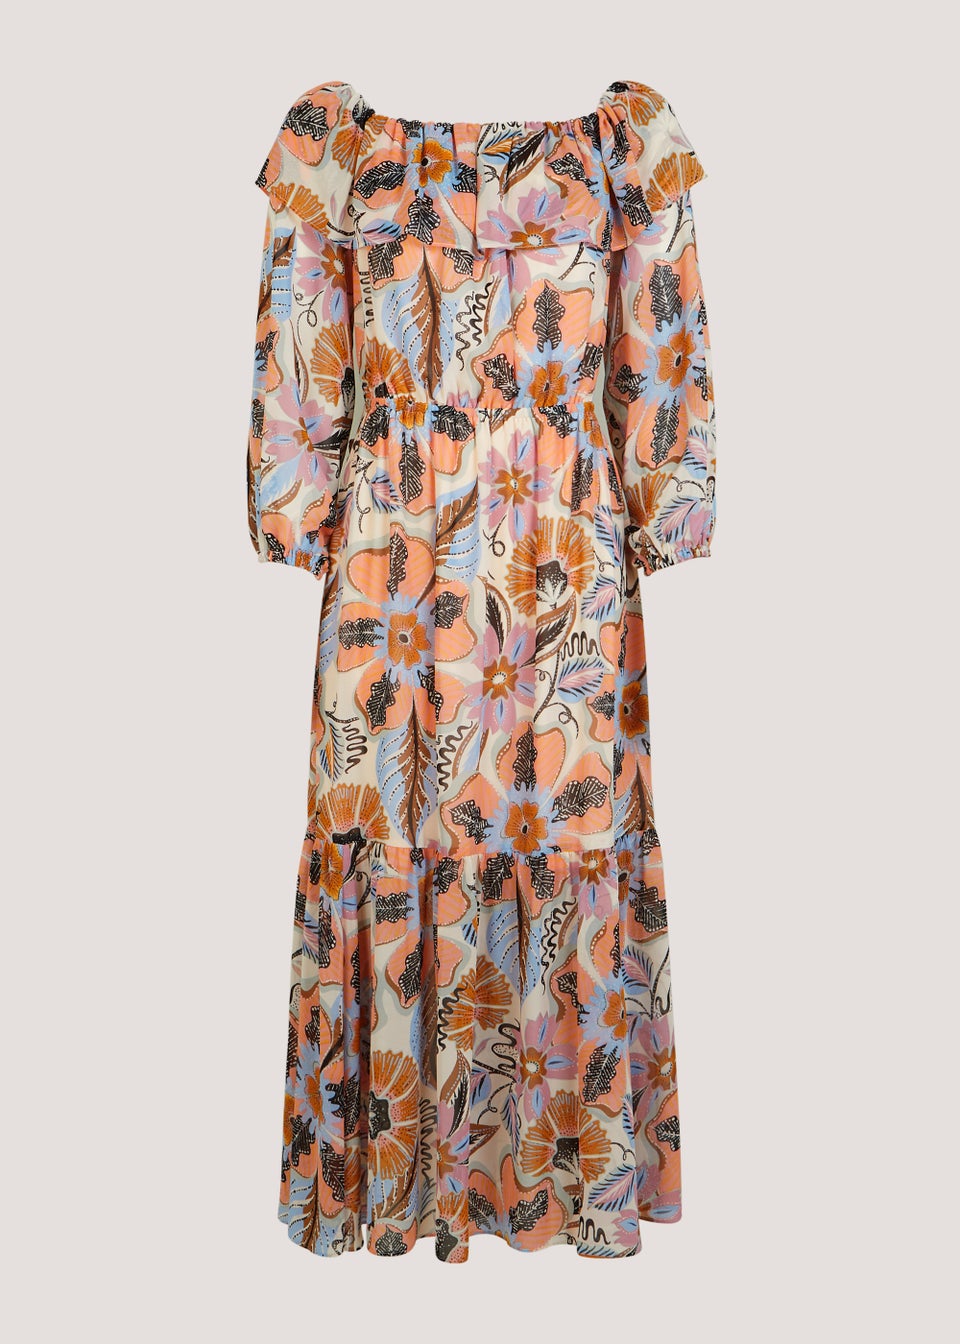 Et Vous Ivory Floral Print Chiffon Bardot Maxi Dress - Matalan